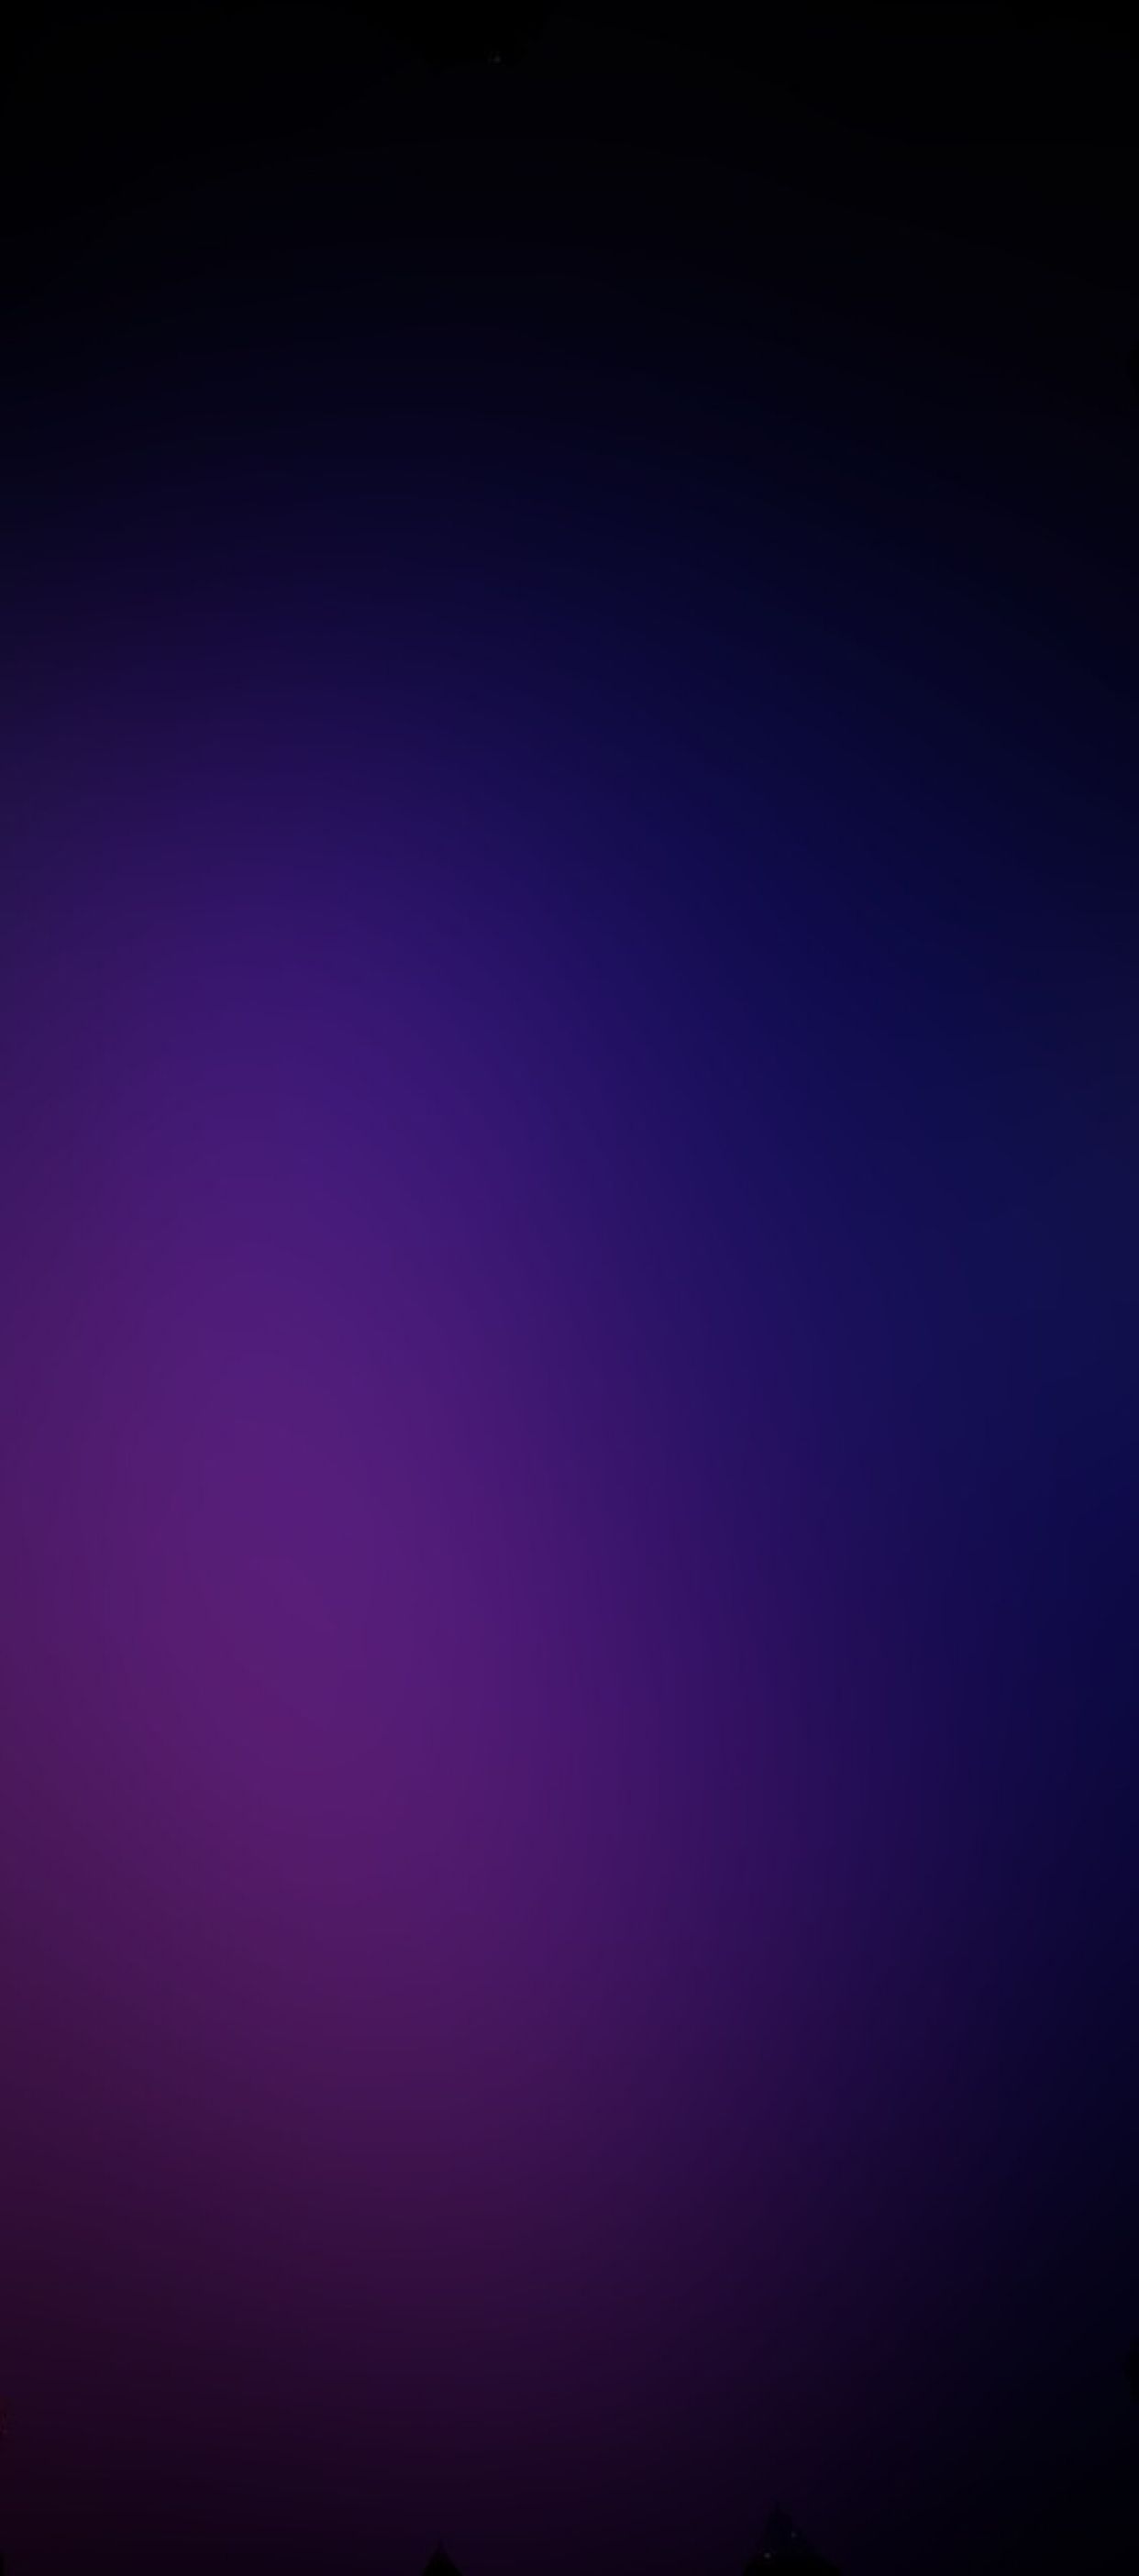 Purple Galaxy S8 Wallpaper Free Purple Galaxy S8 Background